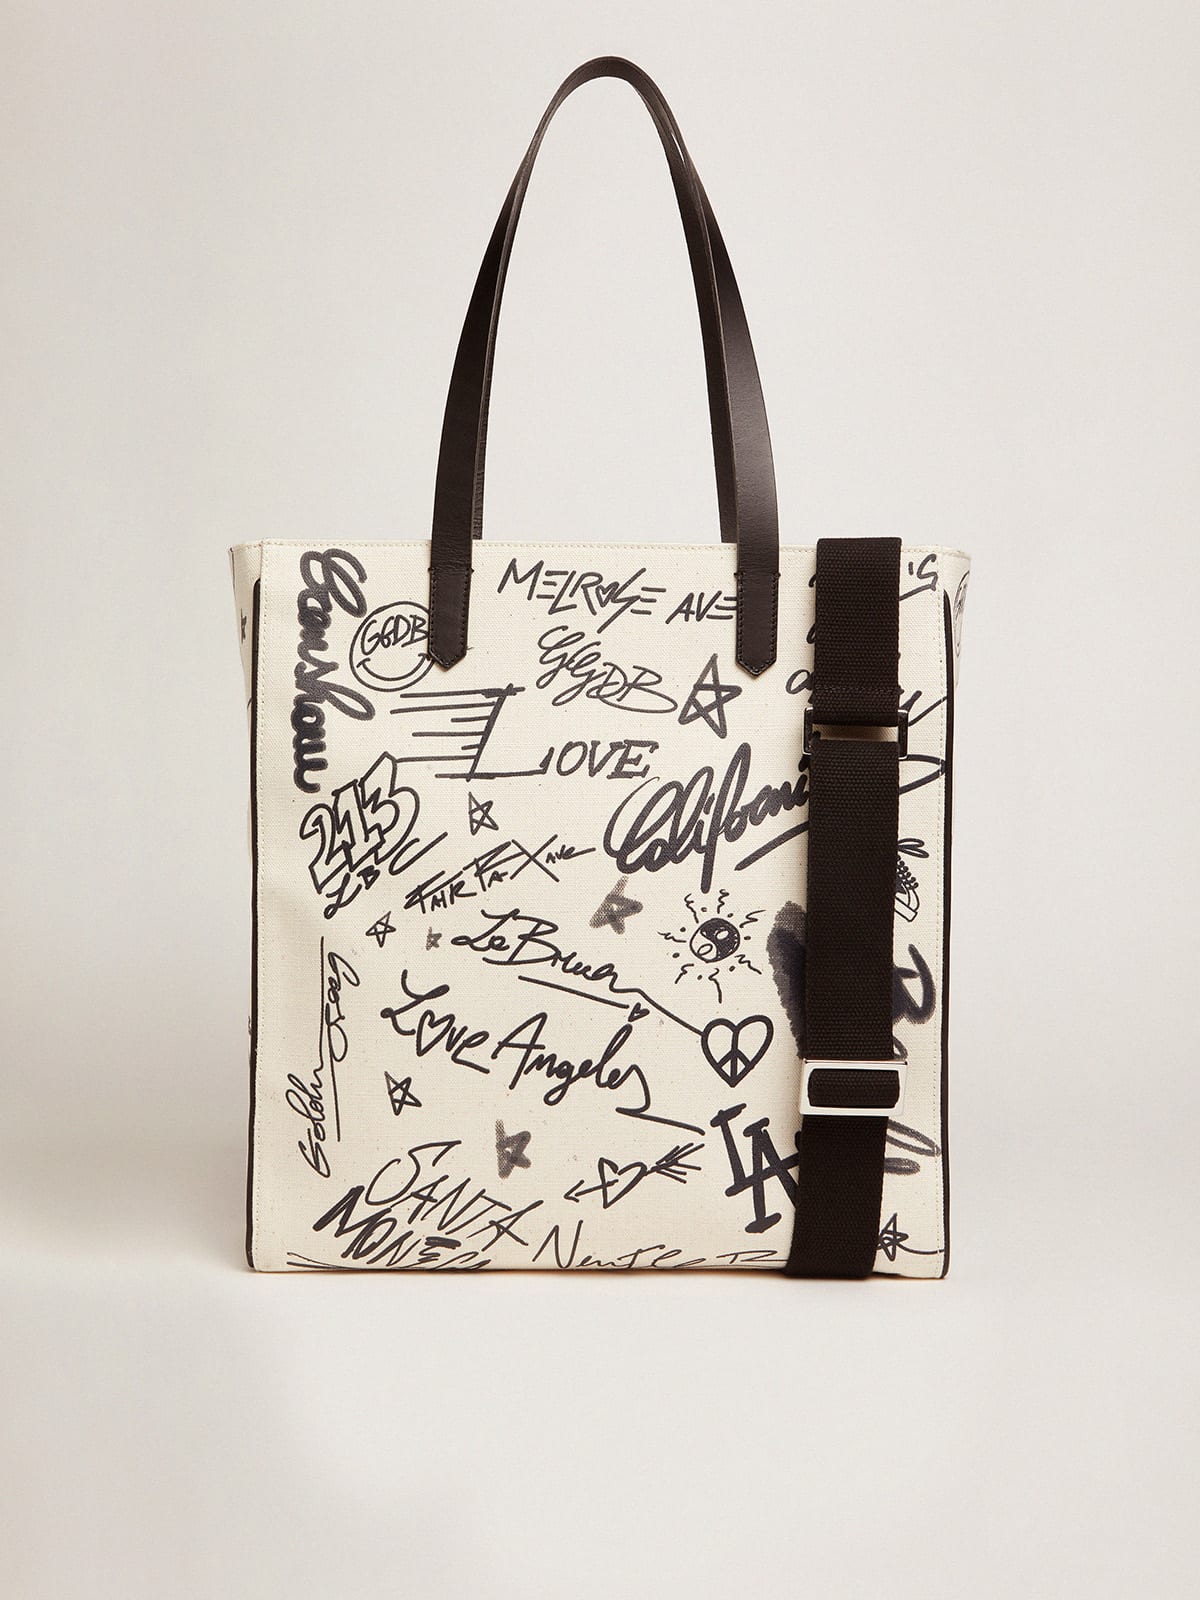 Golden Goose - Sac California Bag North-South blanc avec imprimé graffiti noir contrasté in 